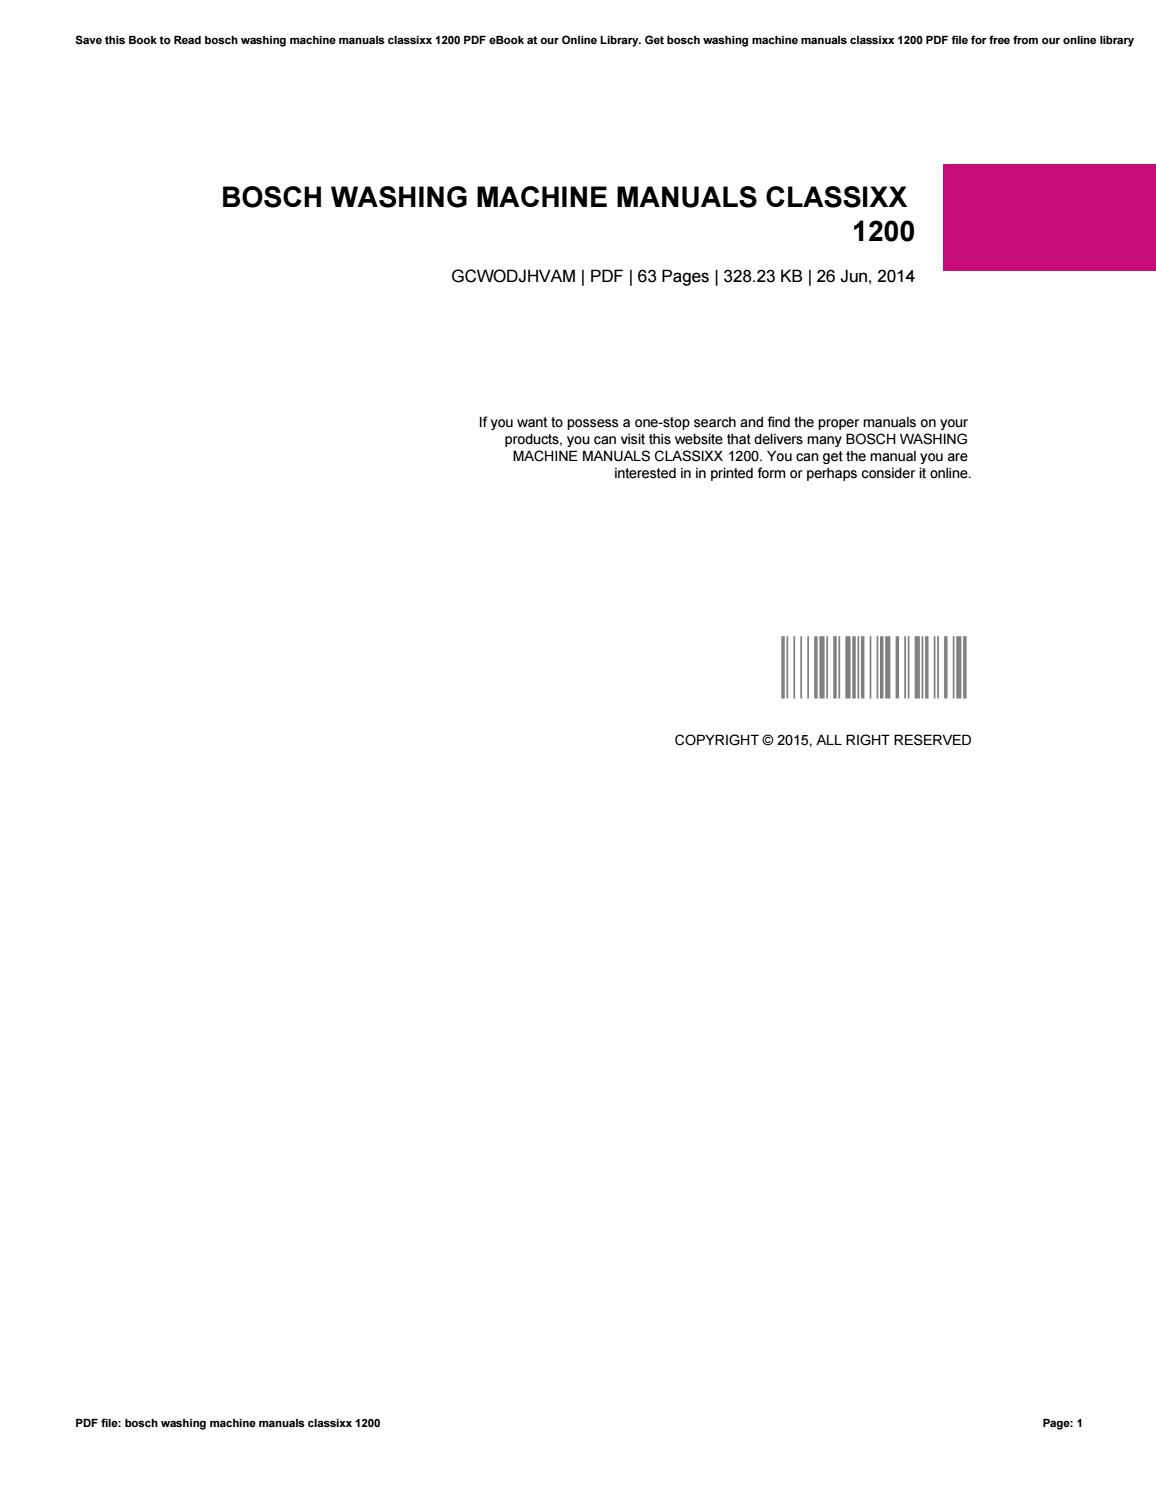 Bosch classixx 5 manual pdf